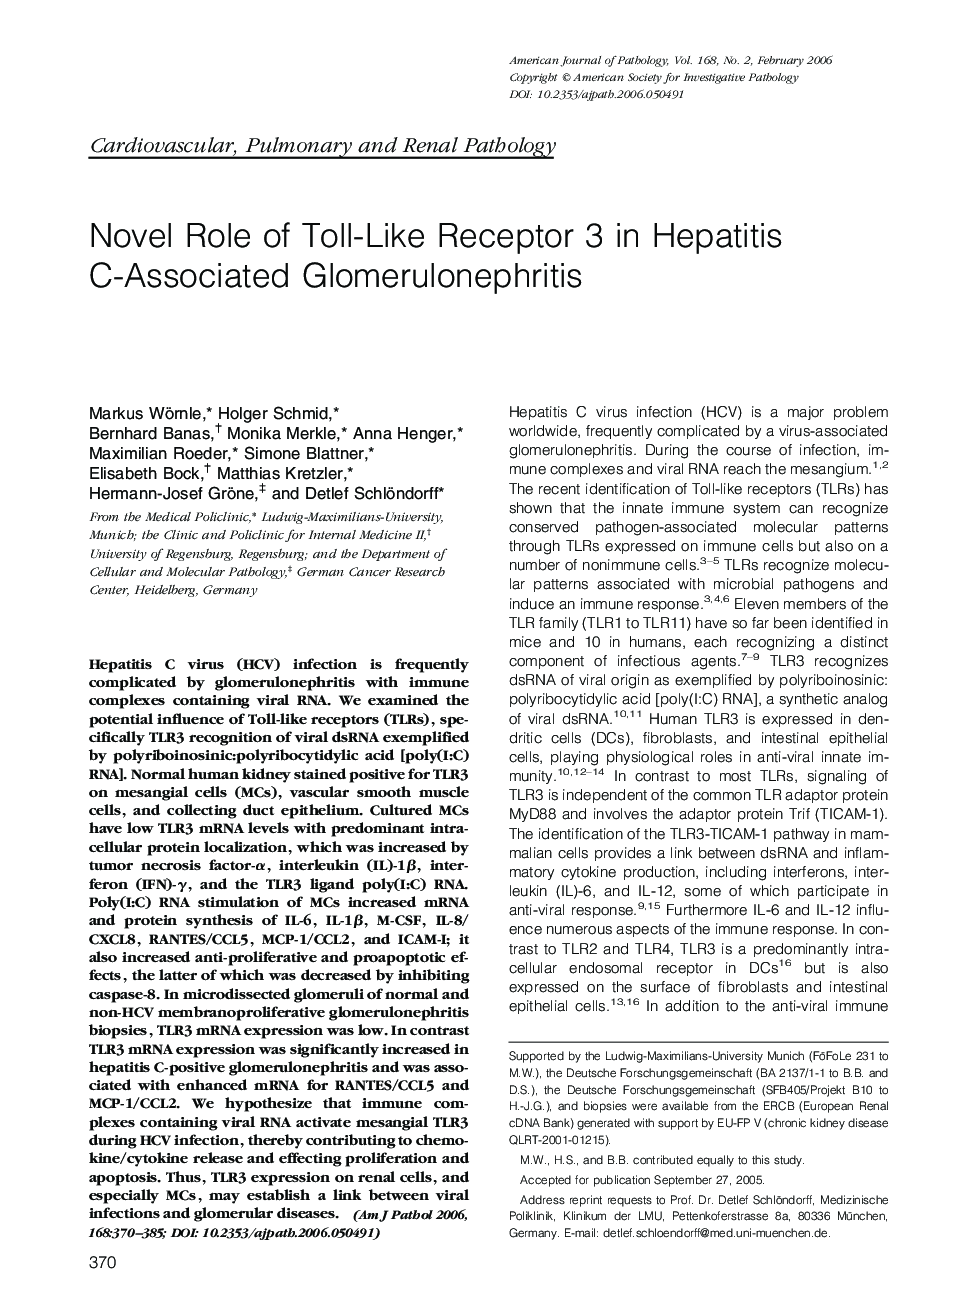 Novel Role of Toll-Like Receptor 3 in Hepatitis C-Associated Glomerulonephritis